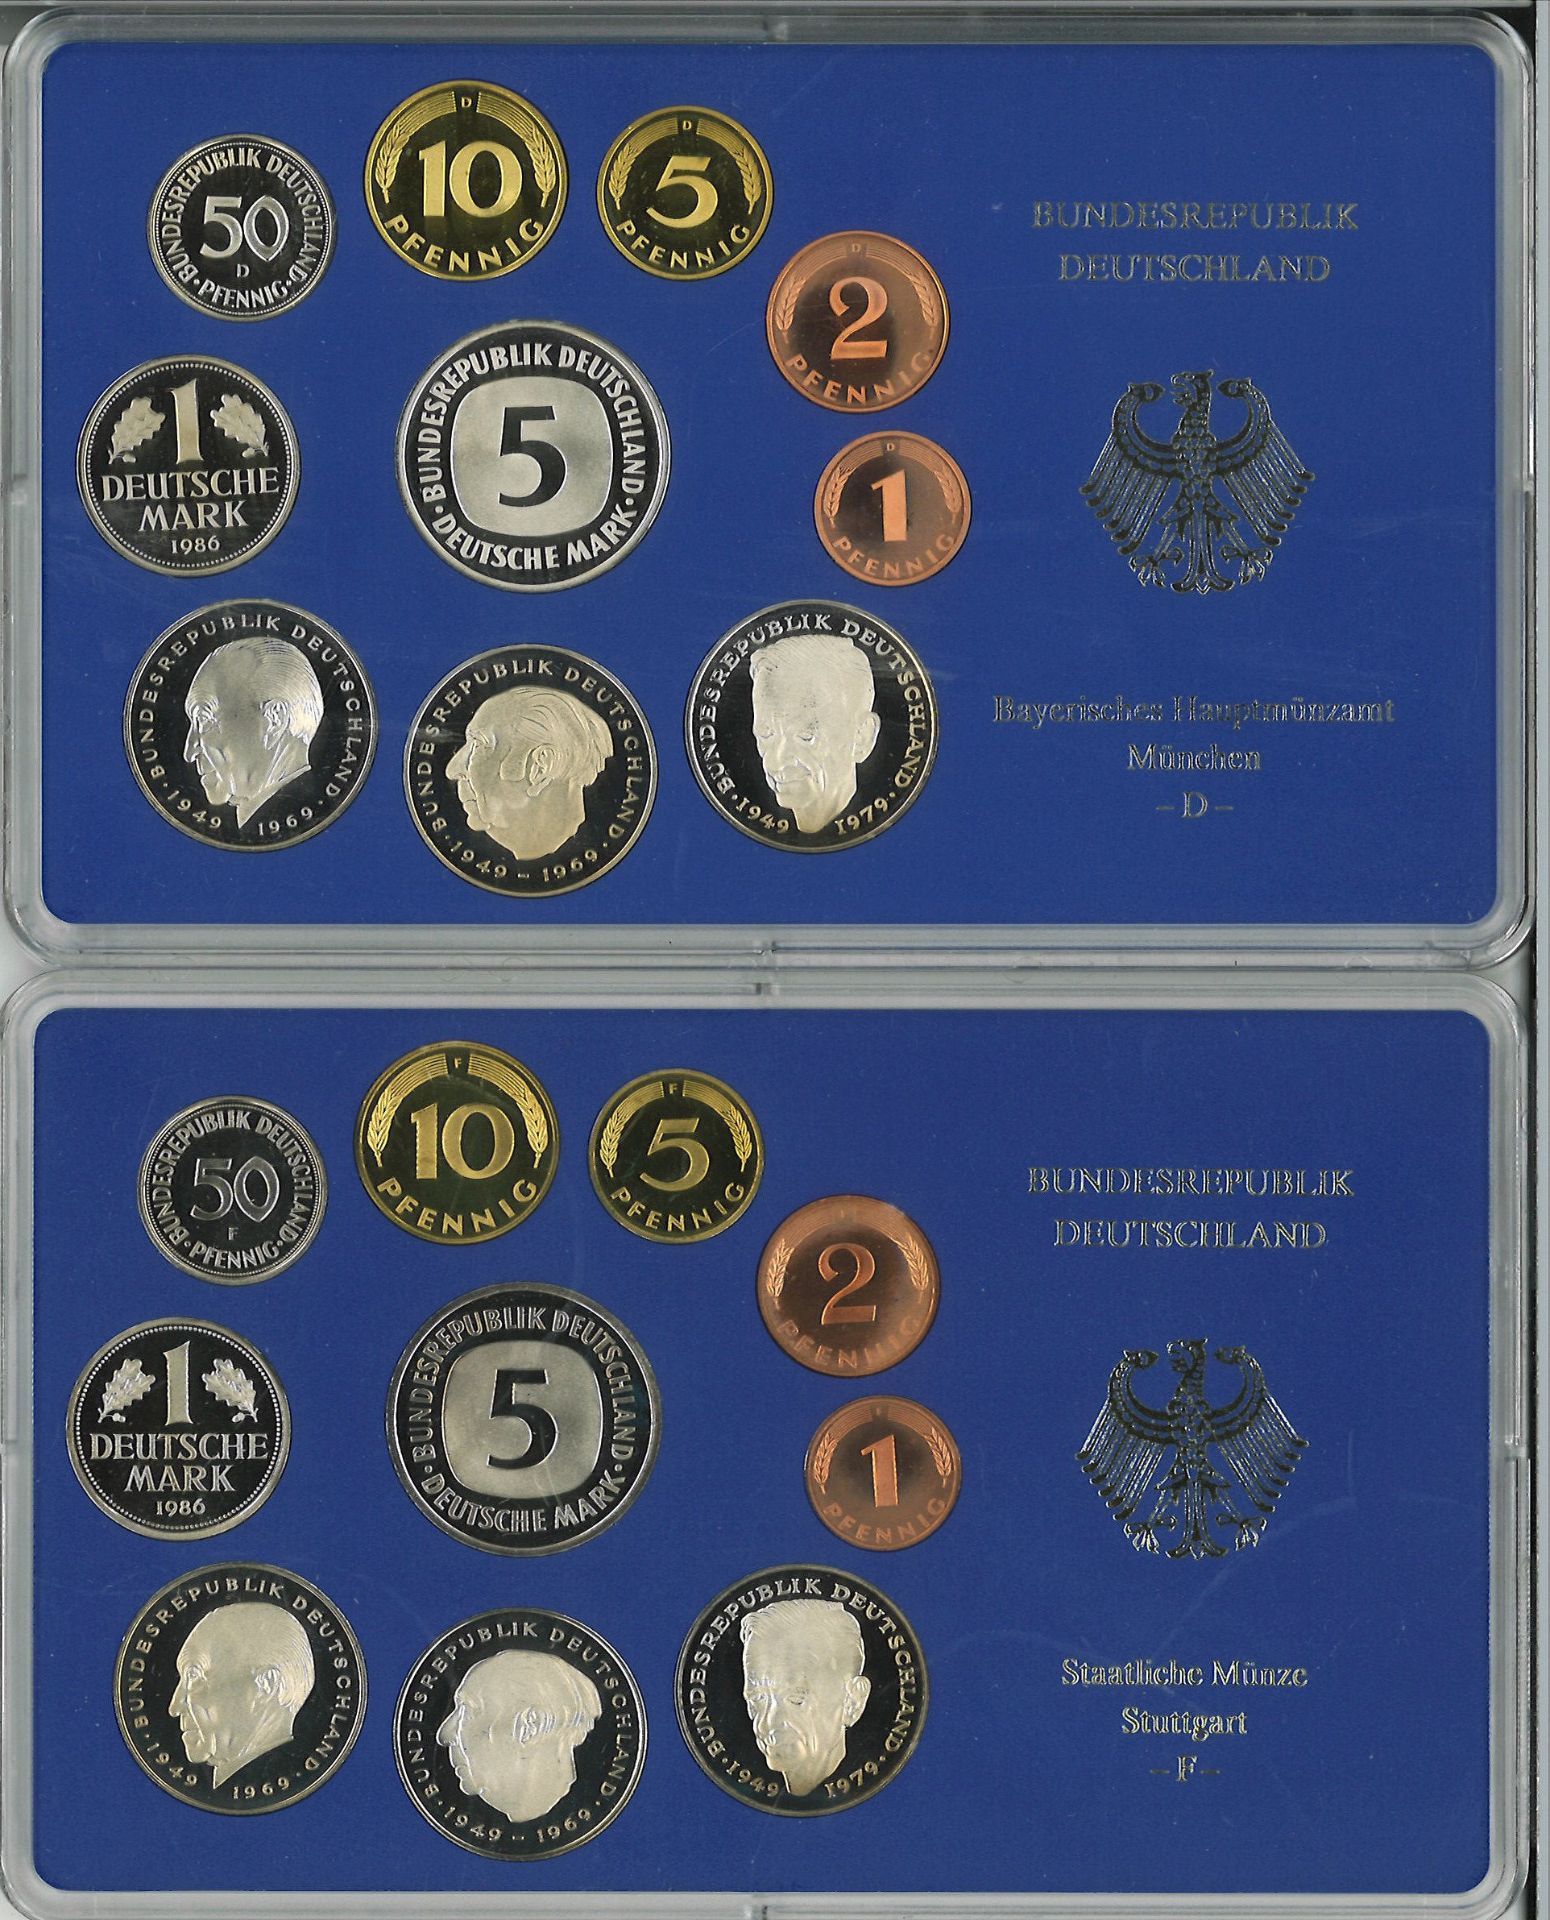 BRD Münzsets Jahrgang 1986, D, F, G und J. Im Original Blister.